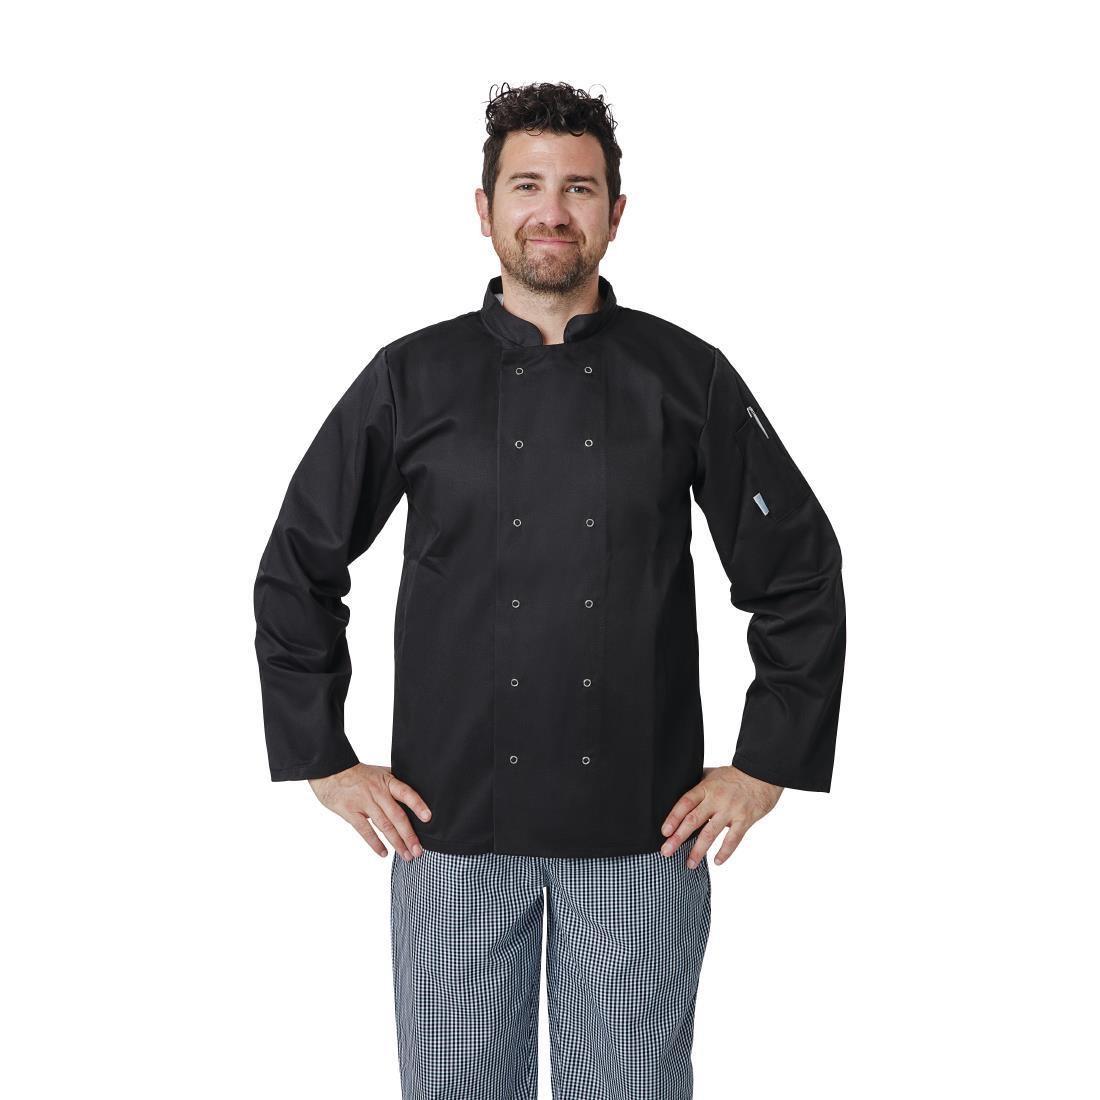 Whites Vegas Unisex Chefs Jacket Long Sleeve Black L - A438-L  - 5